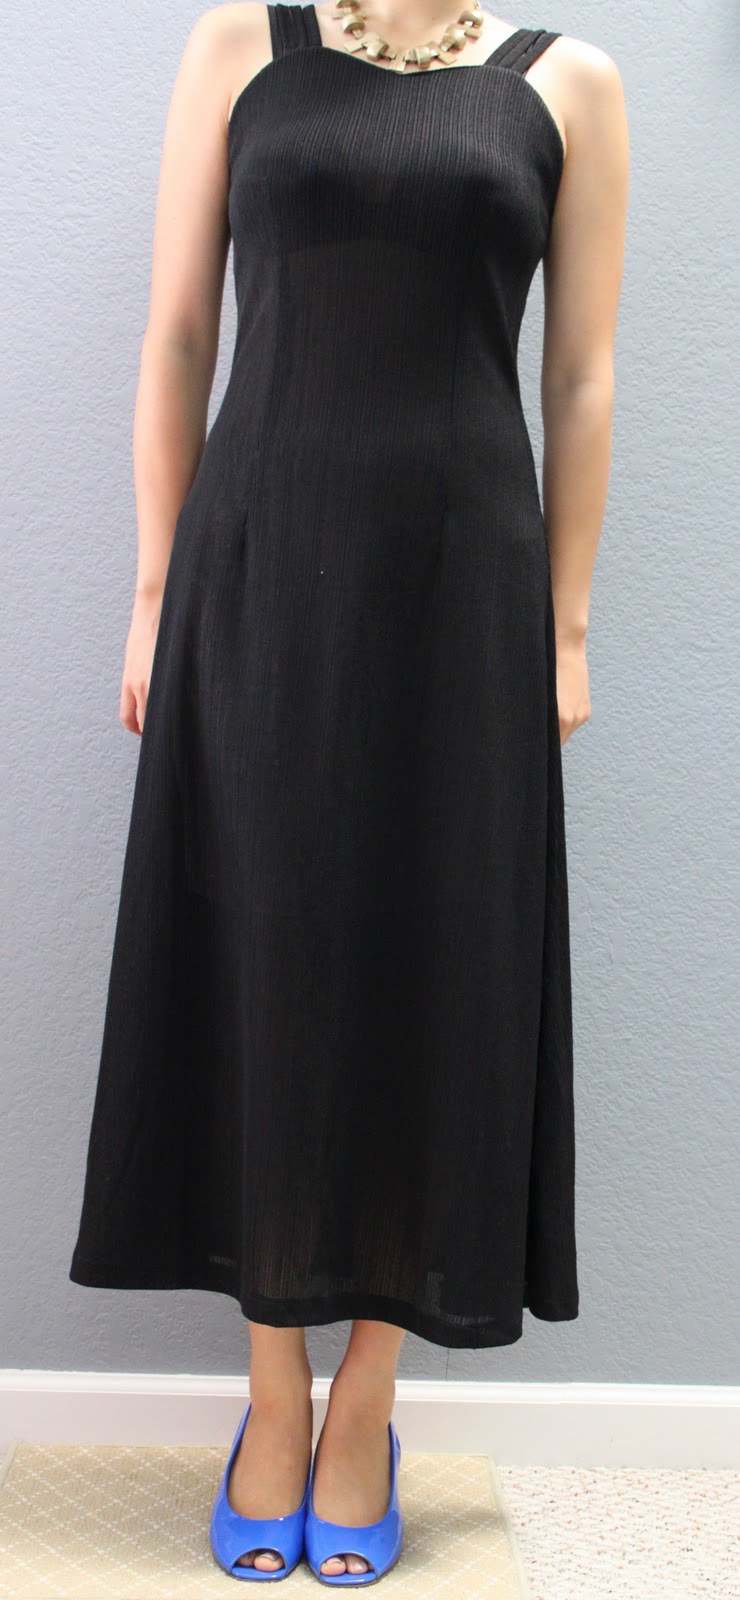 LePetiteLemon: Outfit 53 - Black Maxi Dress